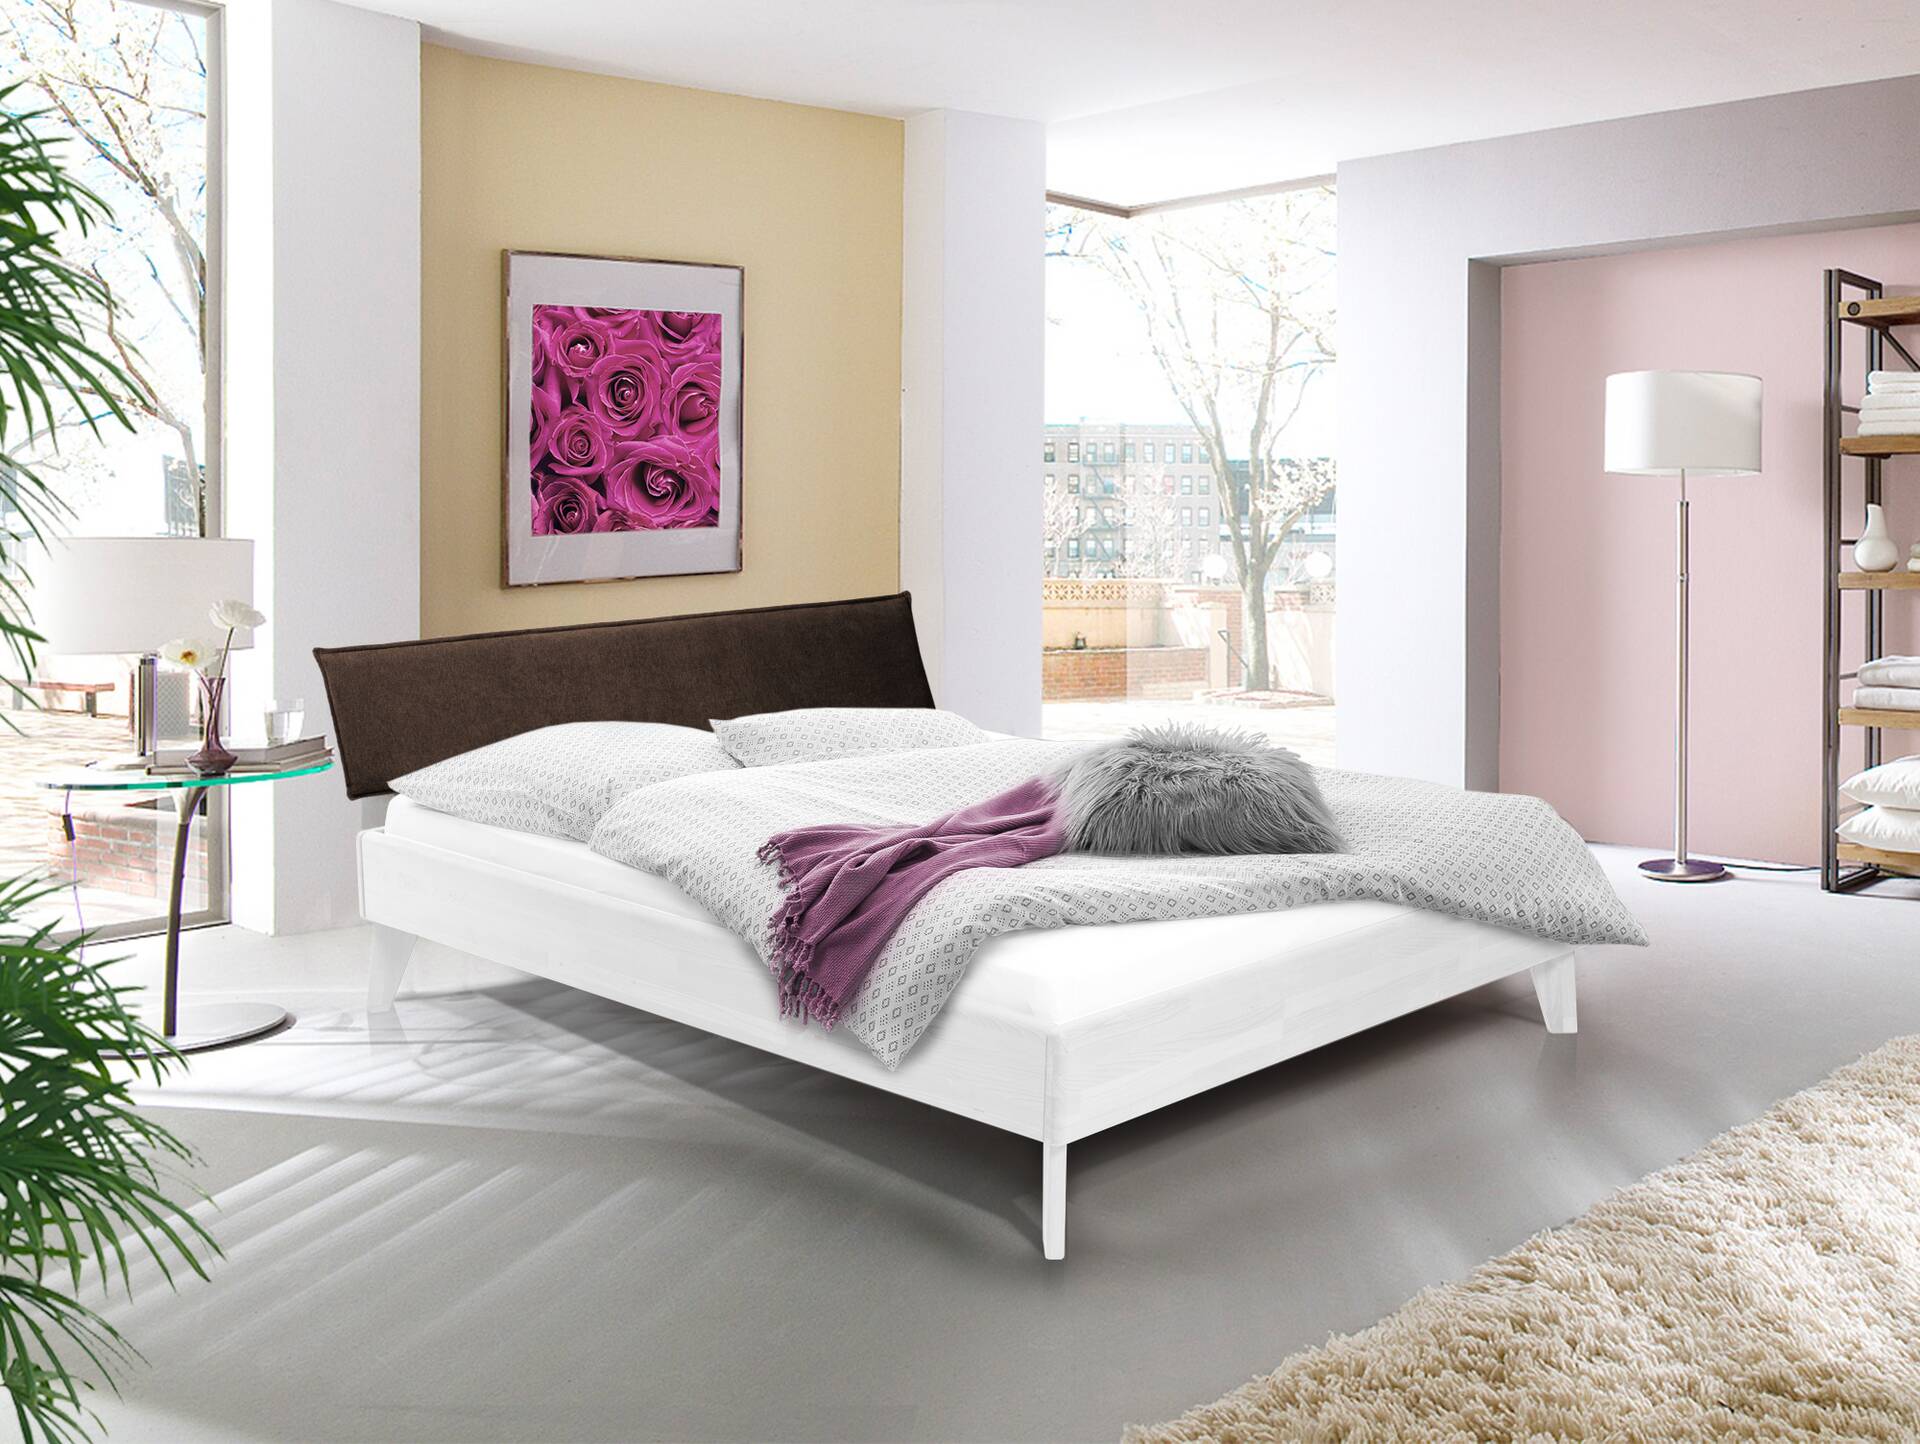 CALIDO 4-Fuß-Bett mit Polster-Kopfteil, Material Massivholz 120 x 220 cm | Buche weiss lackiert | Stoff Braun | Standardhöhe